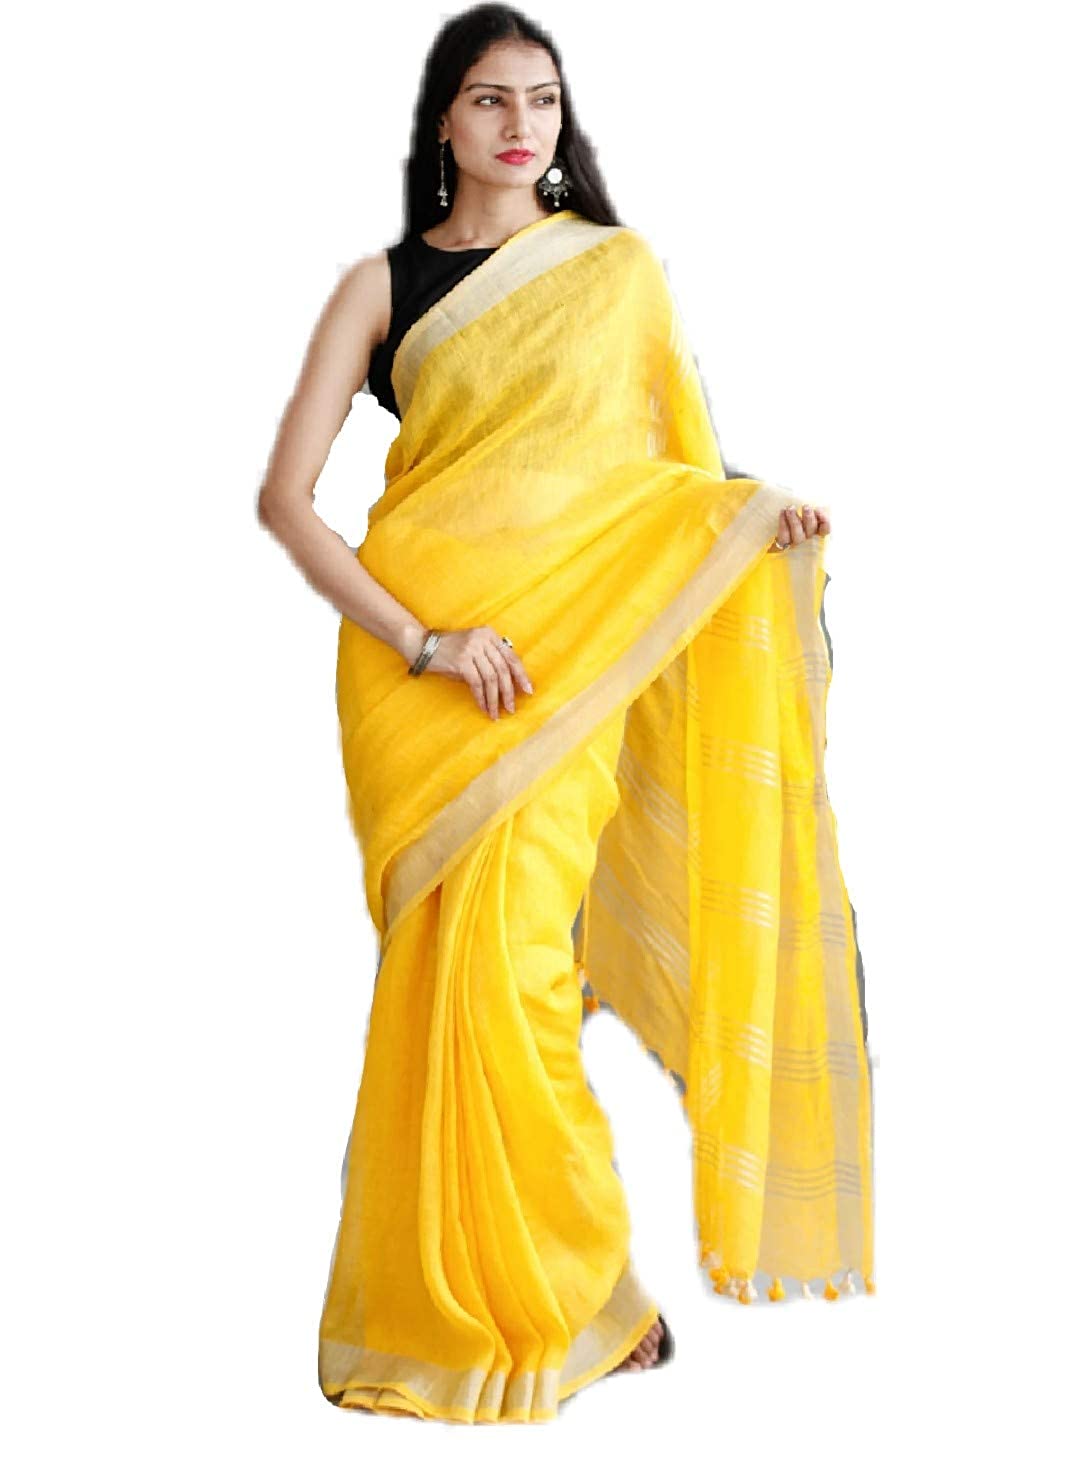 Cotton Sarees For Women: इन डिजाइनर कॉटन साड़ी में इतनी खूबसूरत दिखेंगी आप  कि हर कोई हो जाएगा आप पर फिदा | cotton sarees for women to get stunning  look | HerZindagi